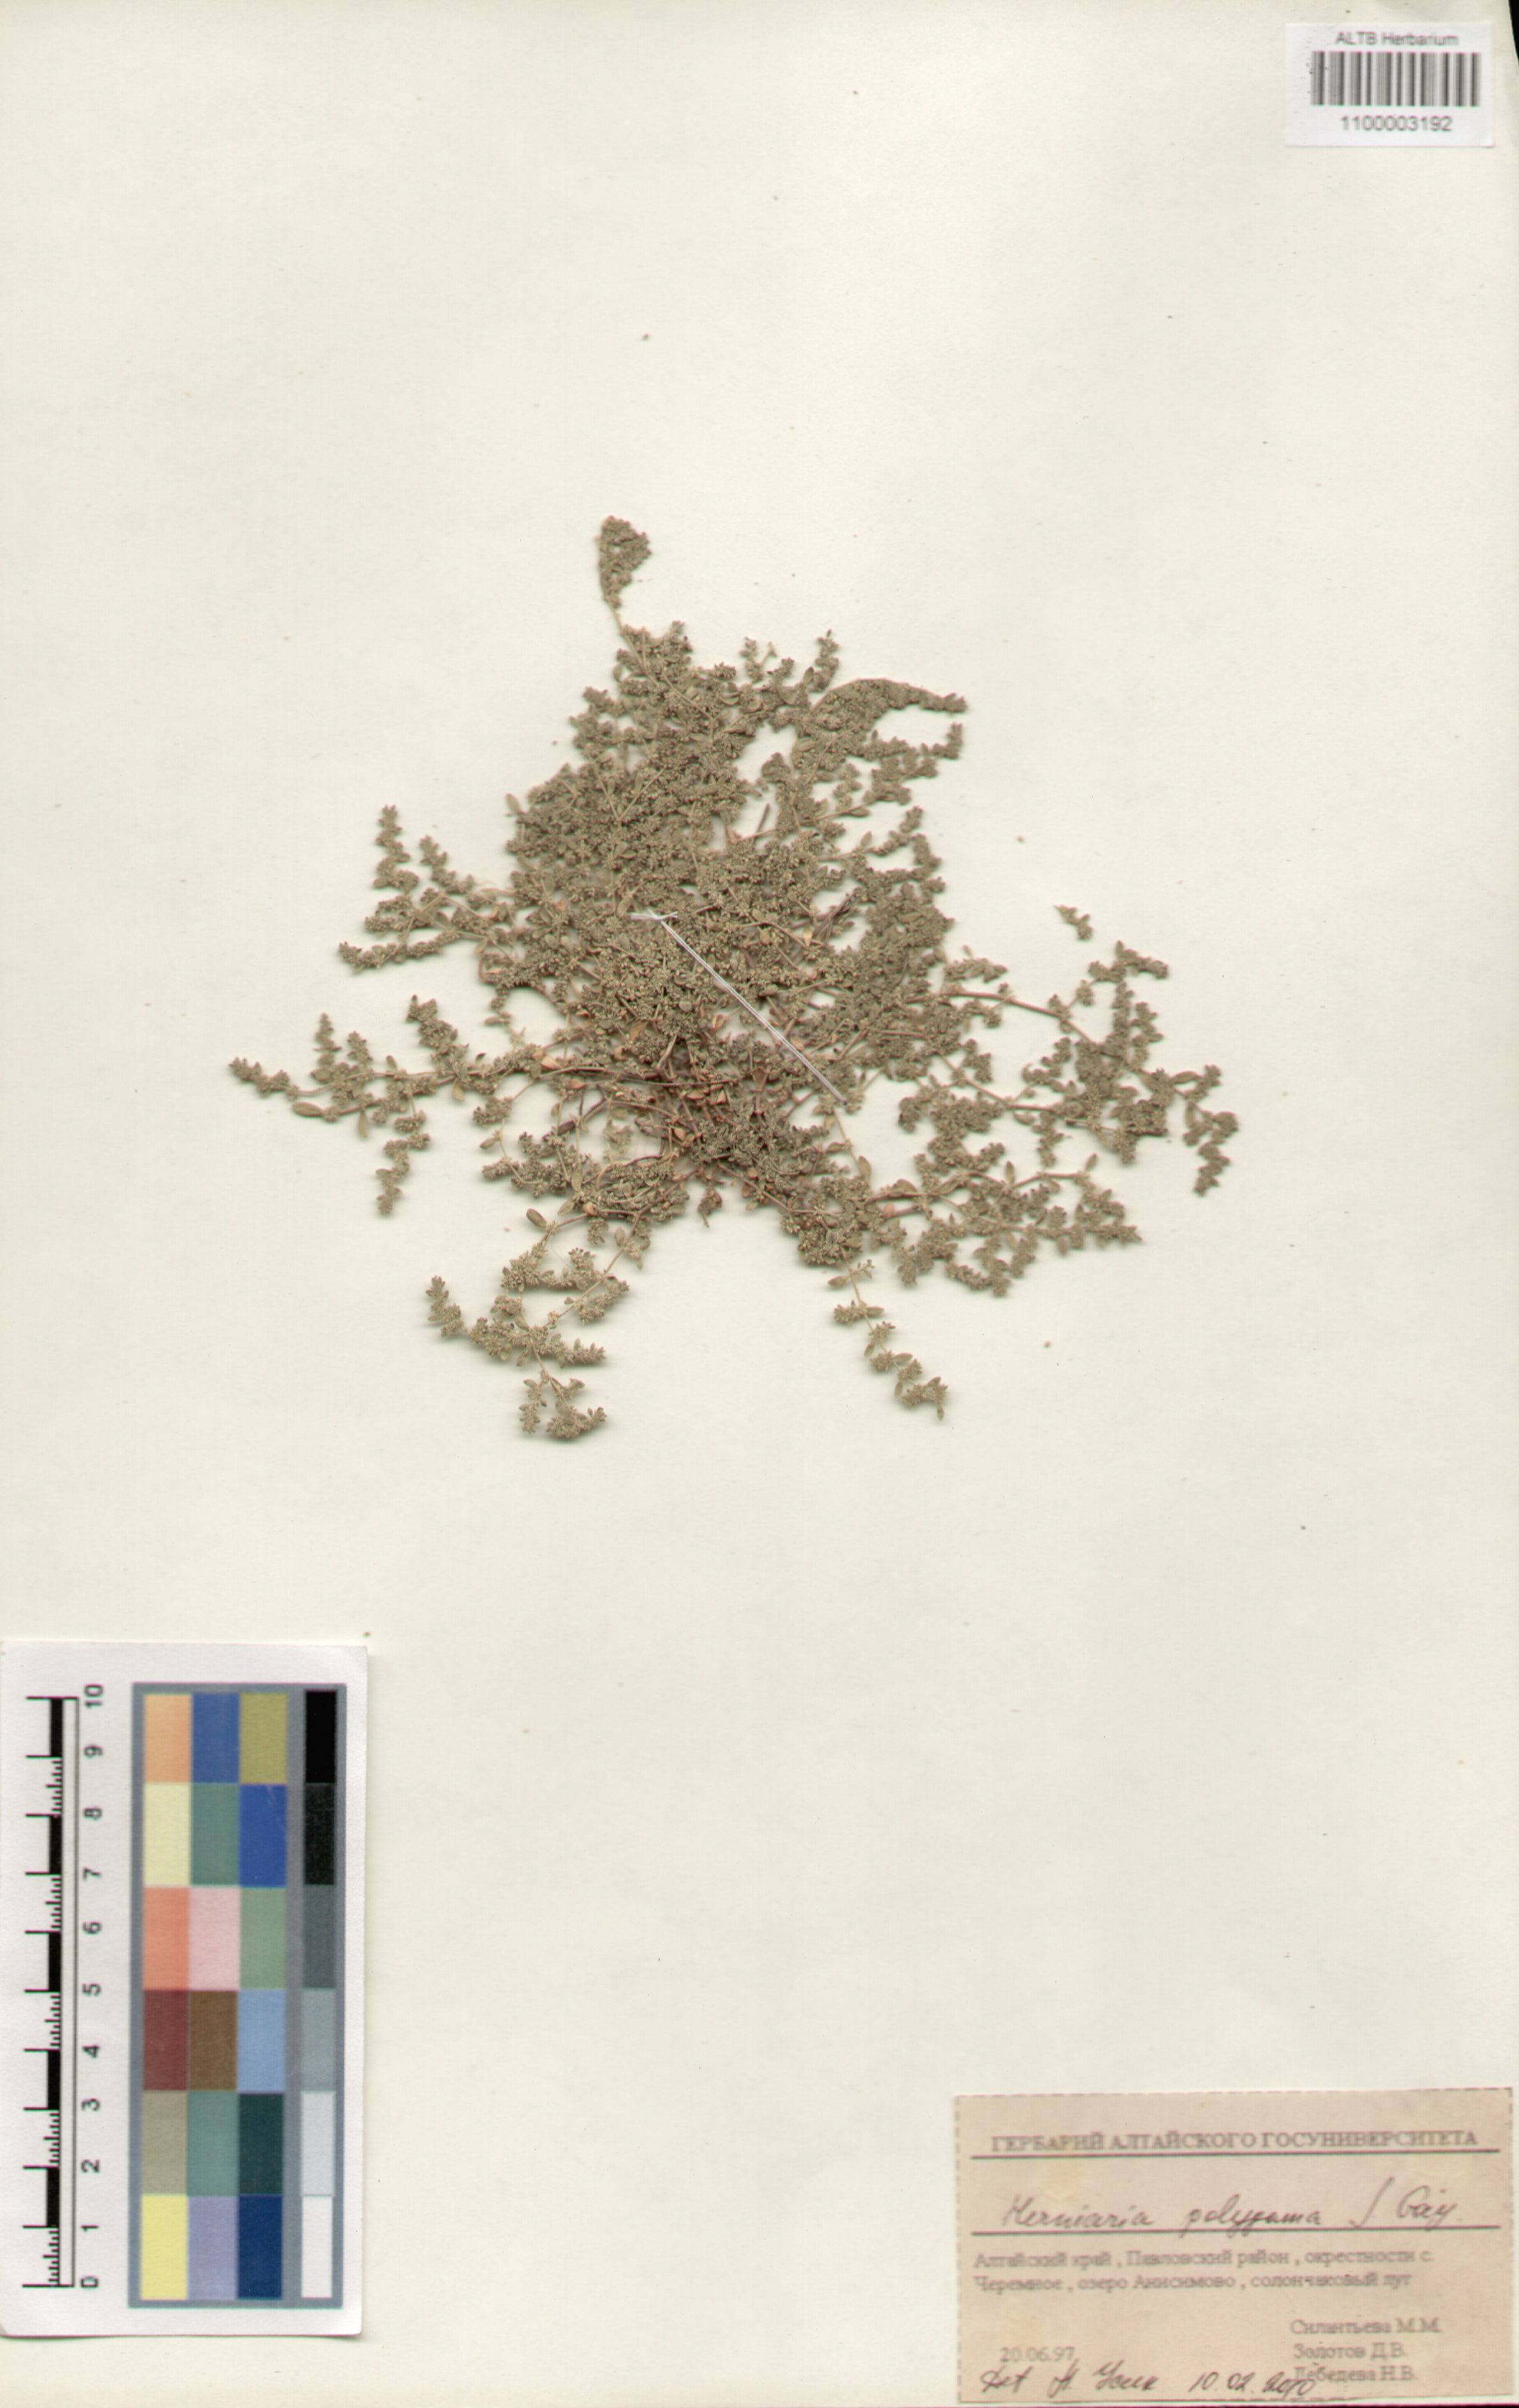 Caryophyllaceae,Herniaria polygama J. Gay.